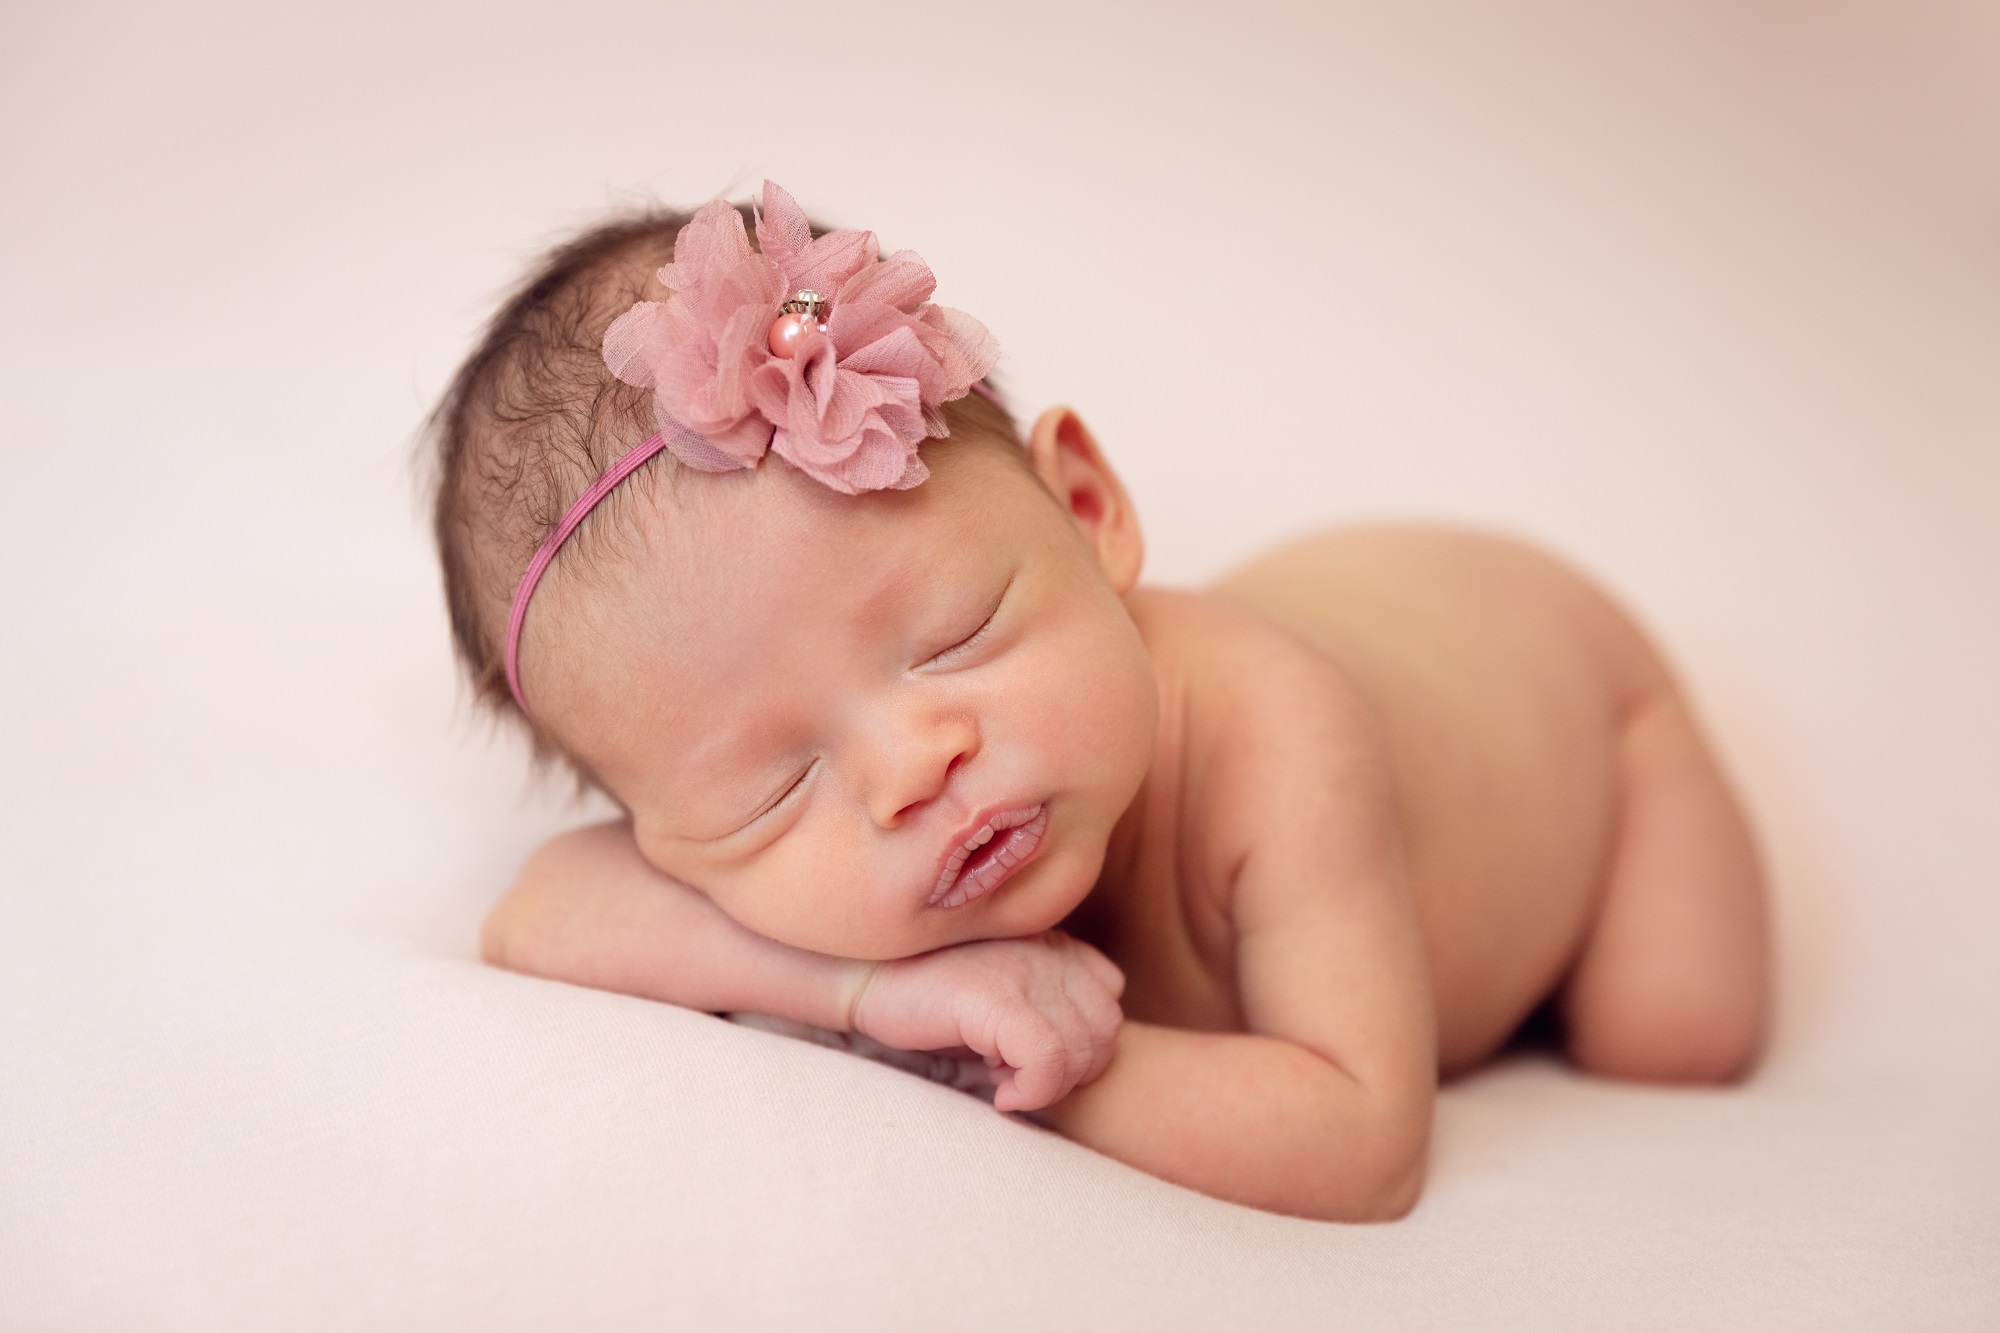 naked newborn baby girl on pink